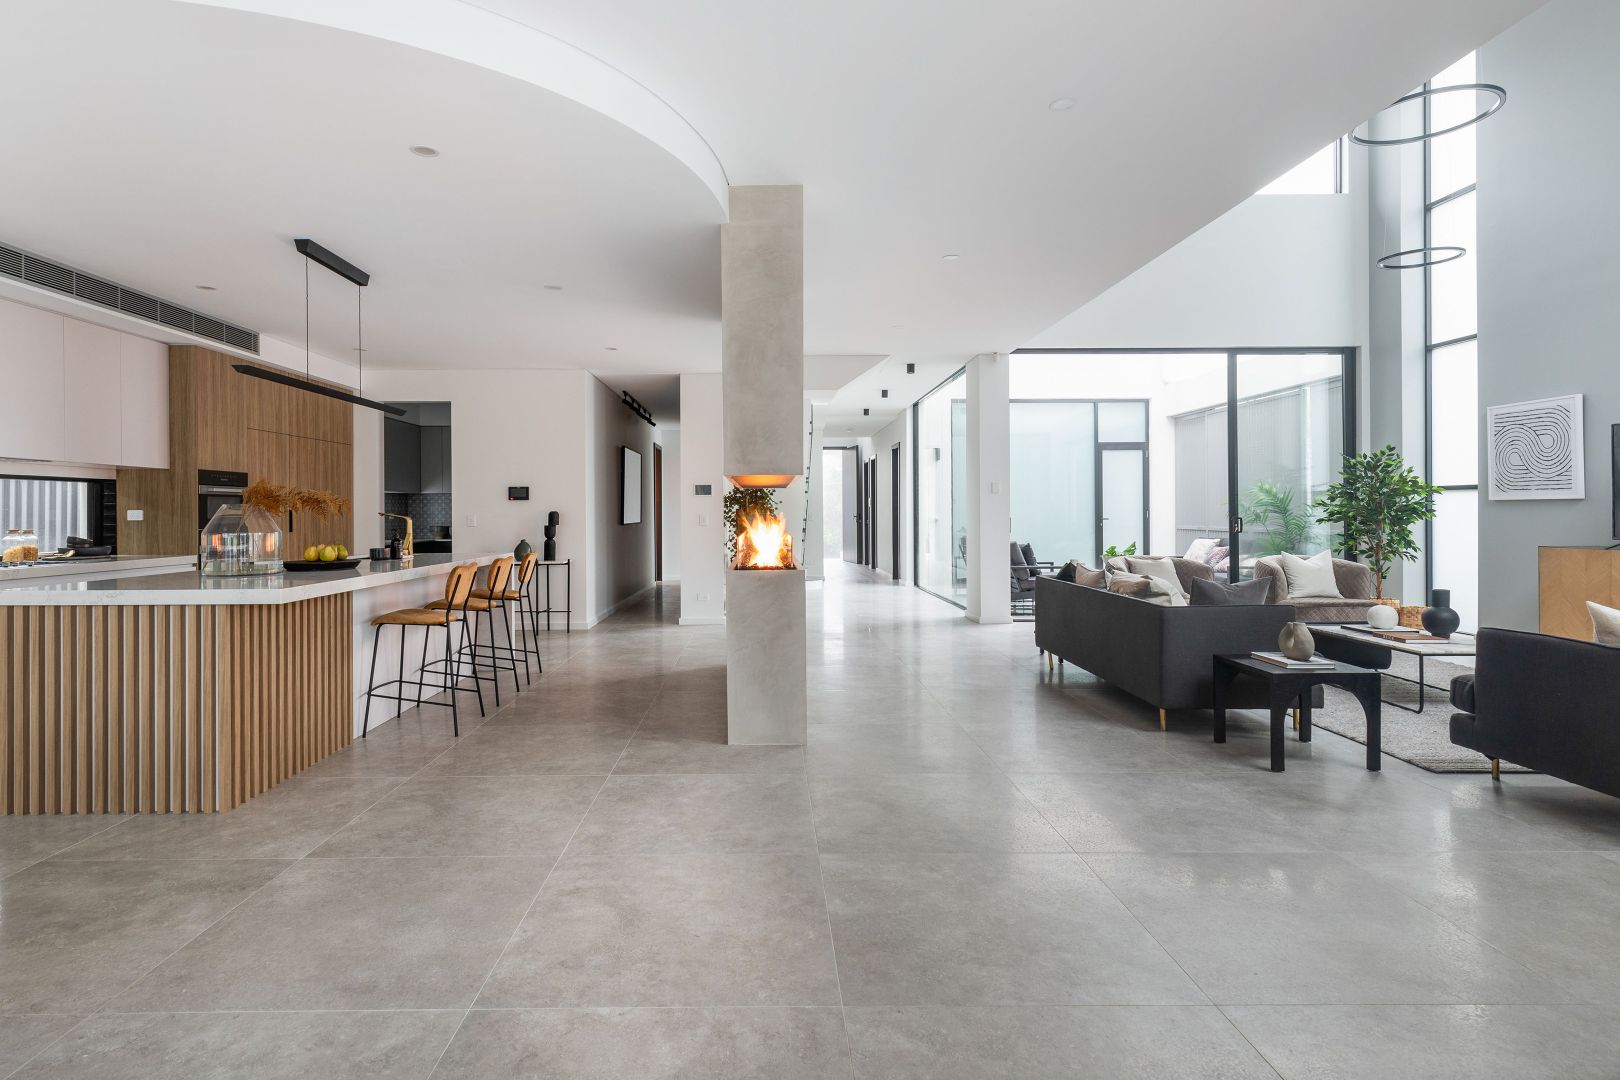 putney project showtile luxury house tile